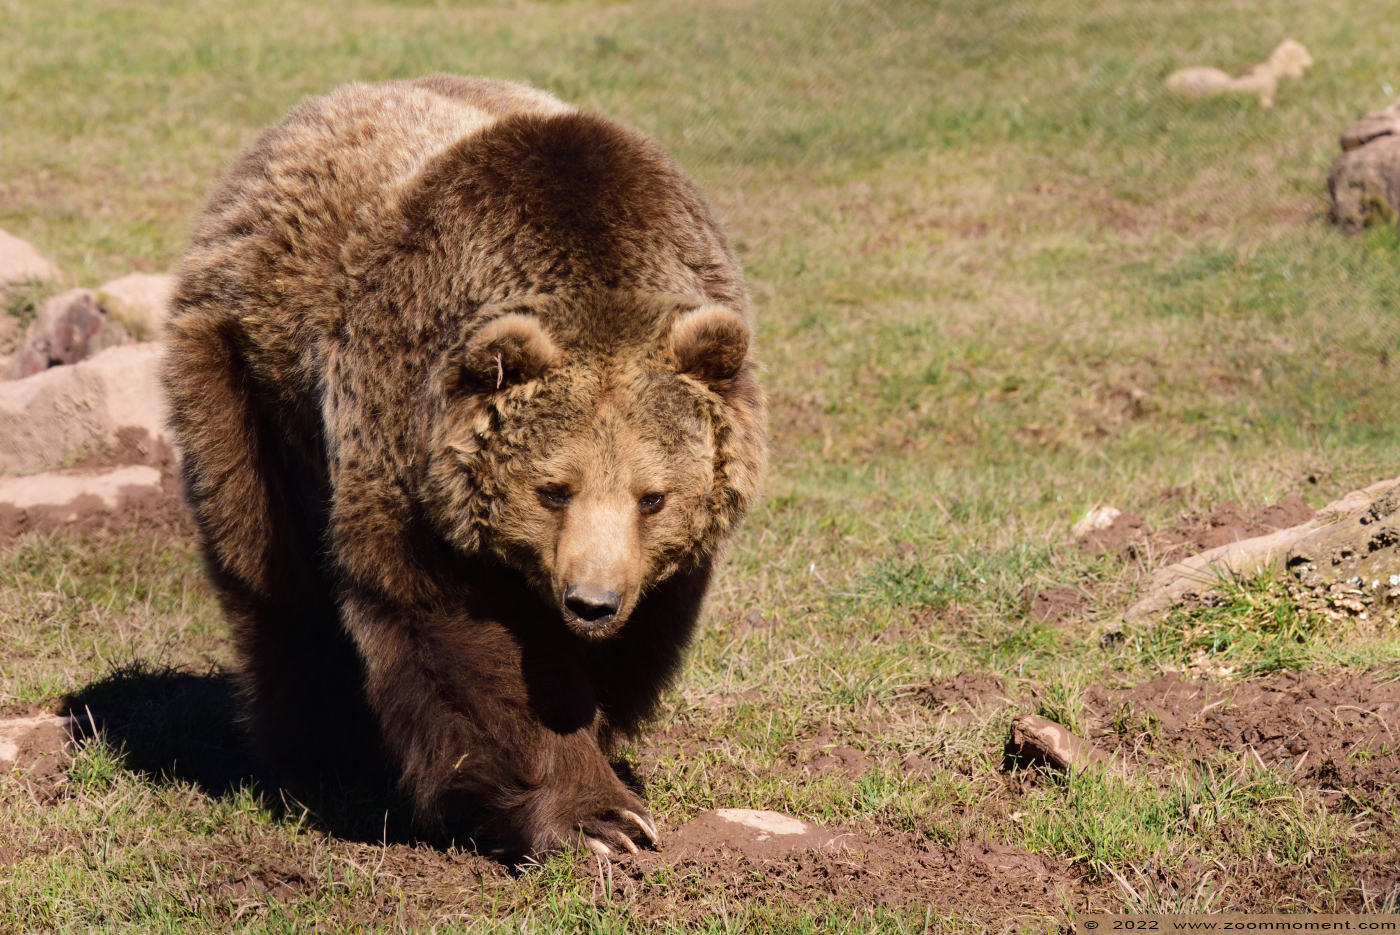 Bruine beer ( Ursus arctos ) brown bear
Trefwoorden: Monde Sauvage Belgium Bruine beer Ursus arctos brown bear